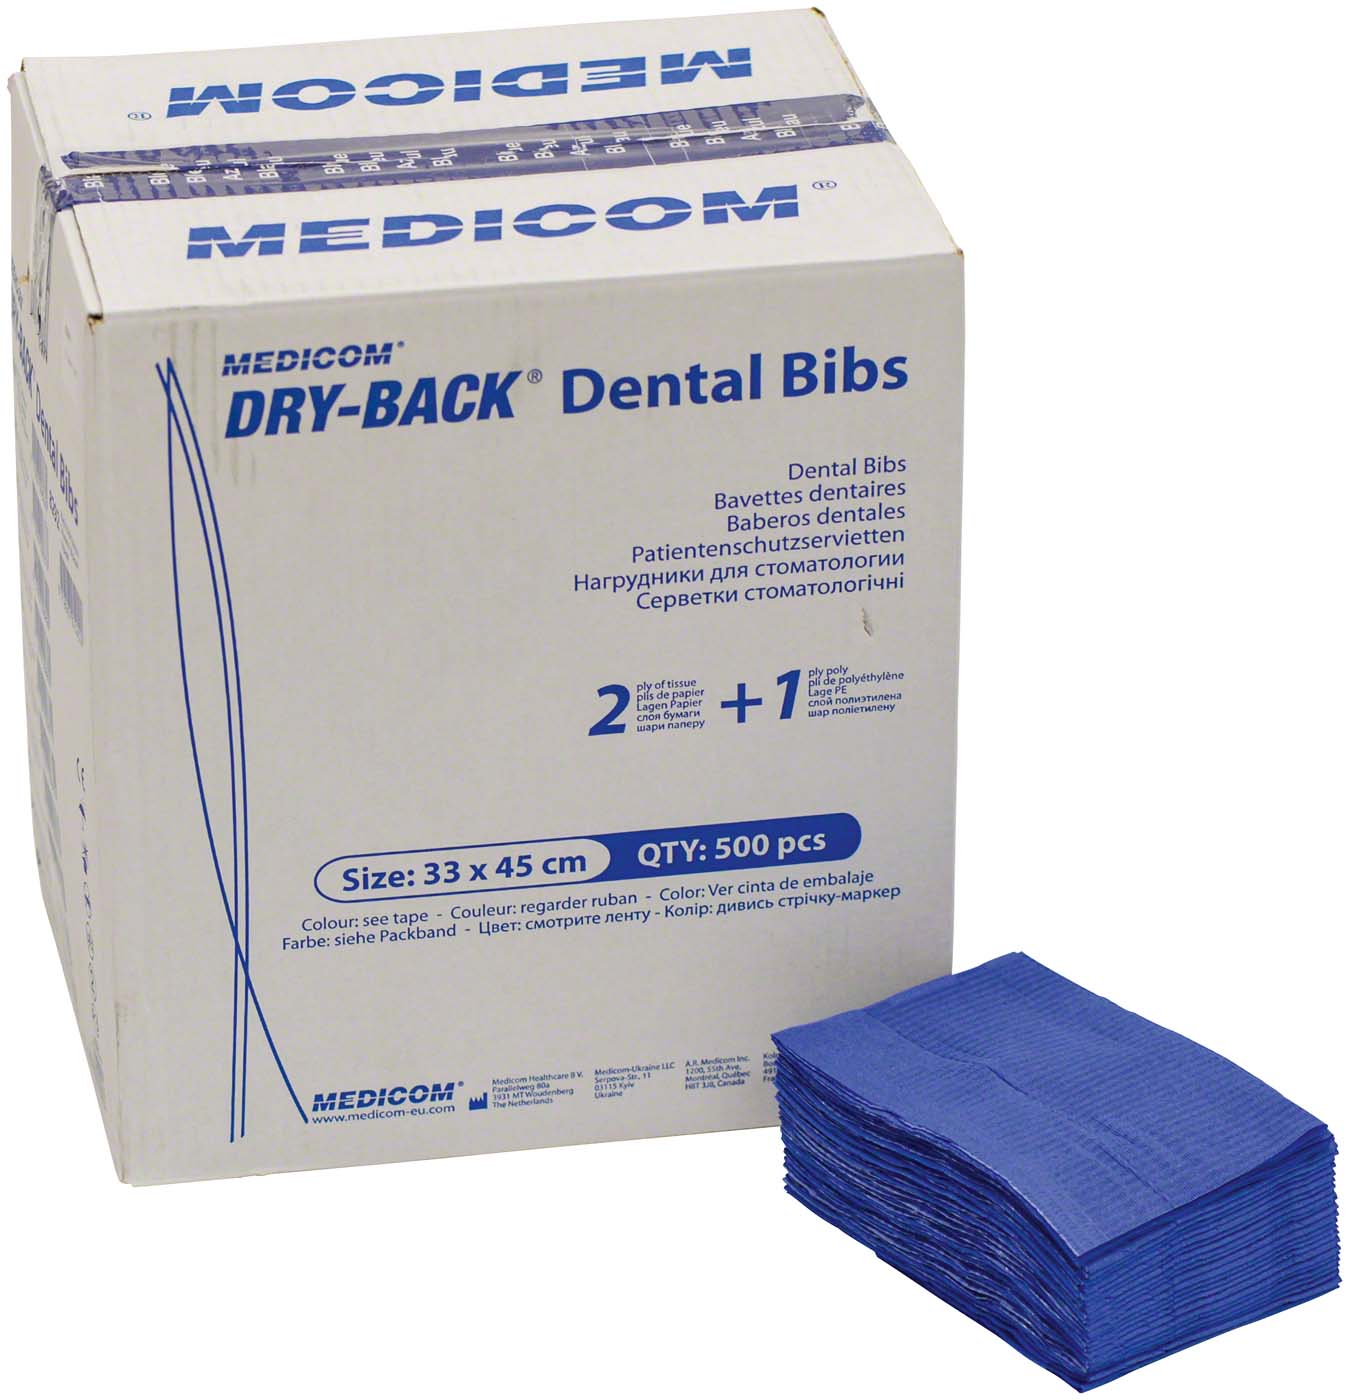 DRY-BACK® Dental Bibs Disposable Technology